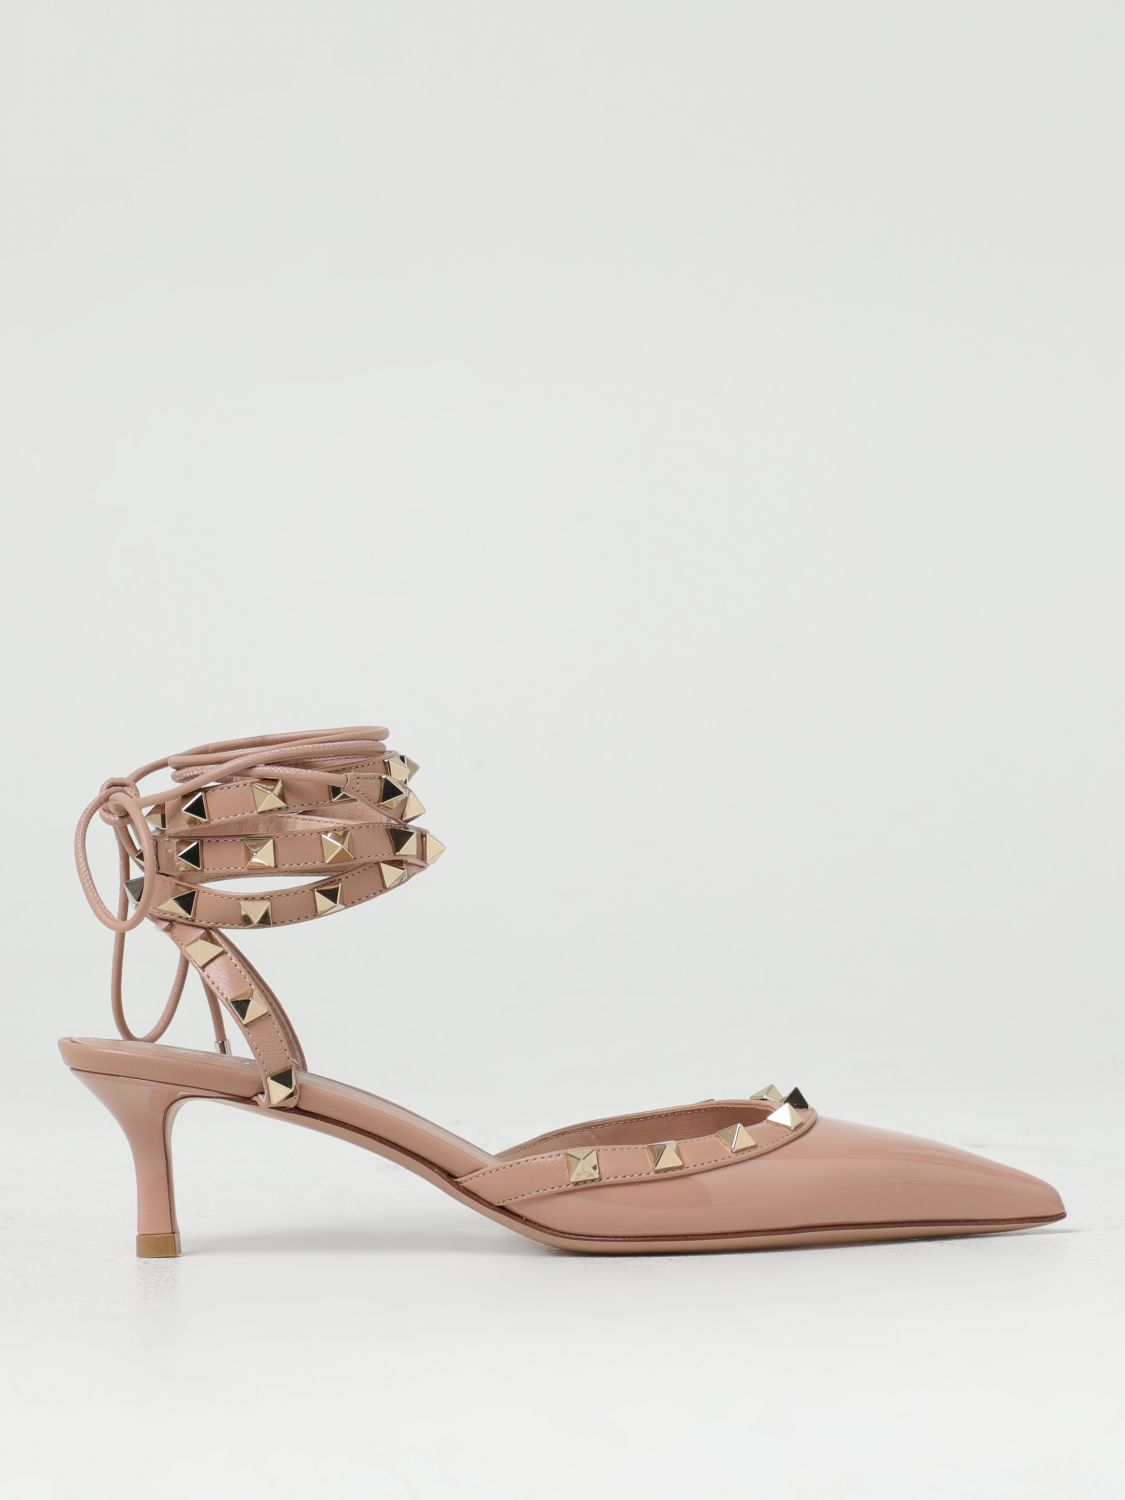 Valentino Garavani High Heel Shoes  Woman In Pink